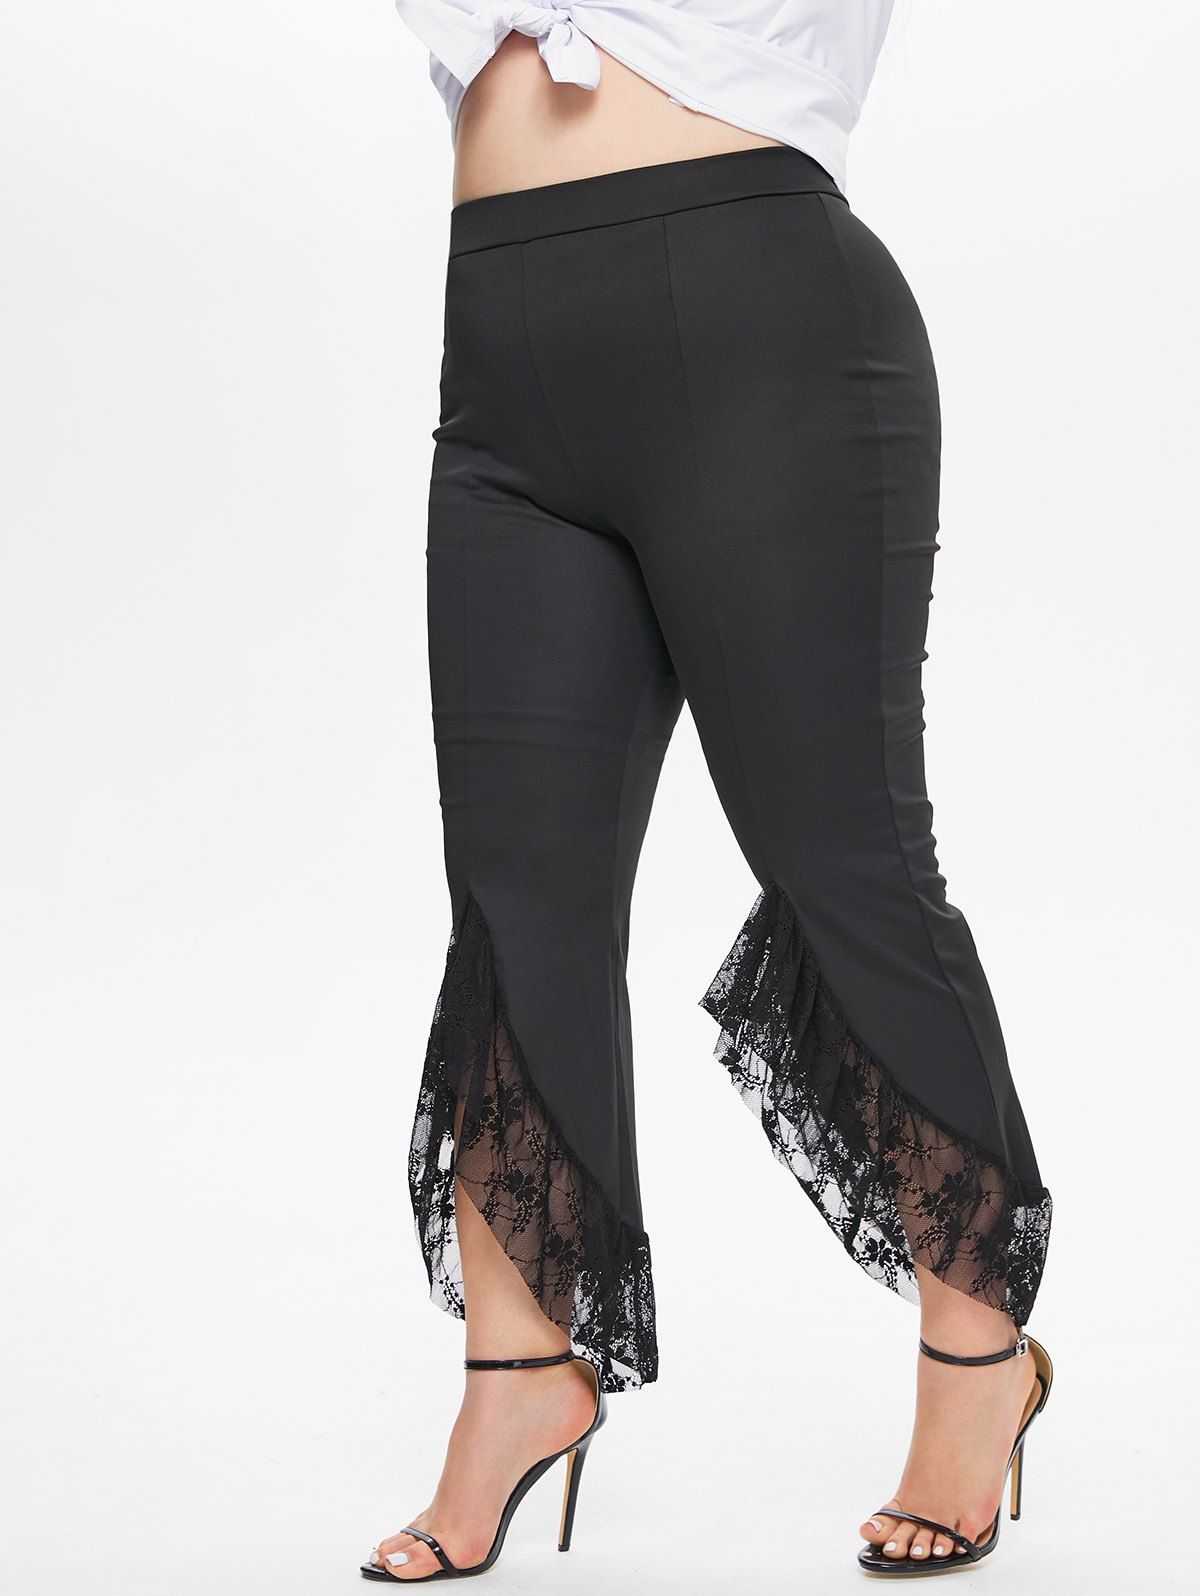 Plus Size Solid Color Casual Flare Pants Slit Floral Lace Insert Elastic High Waist Pants - BLACK 1X